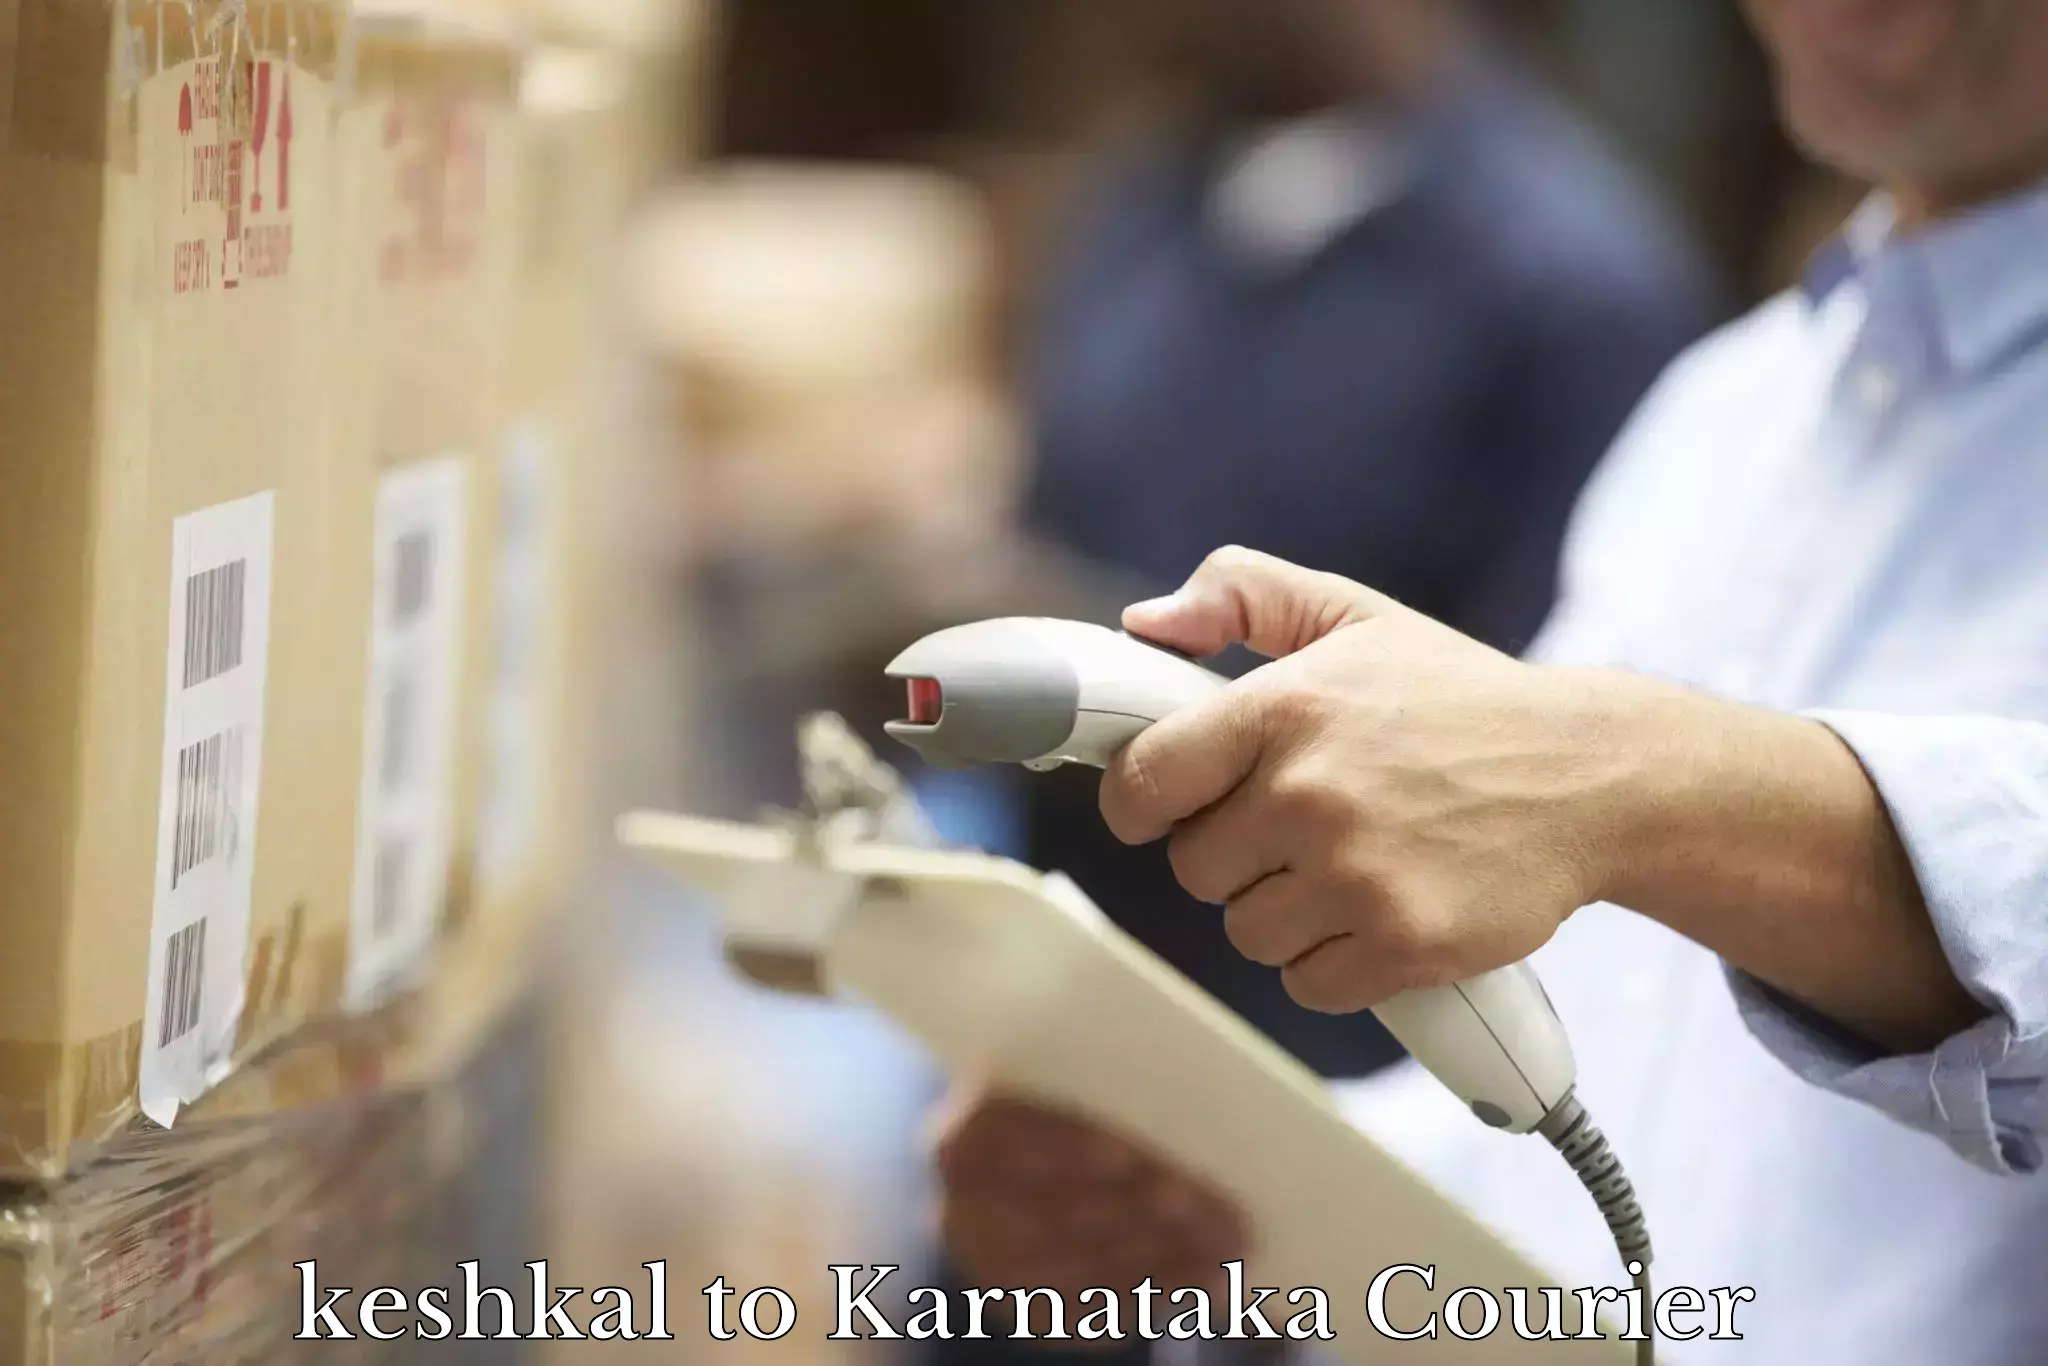 Courier service efficiency keshkal to Mangalore Port